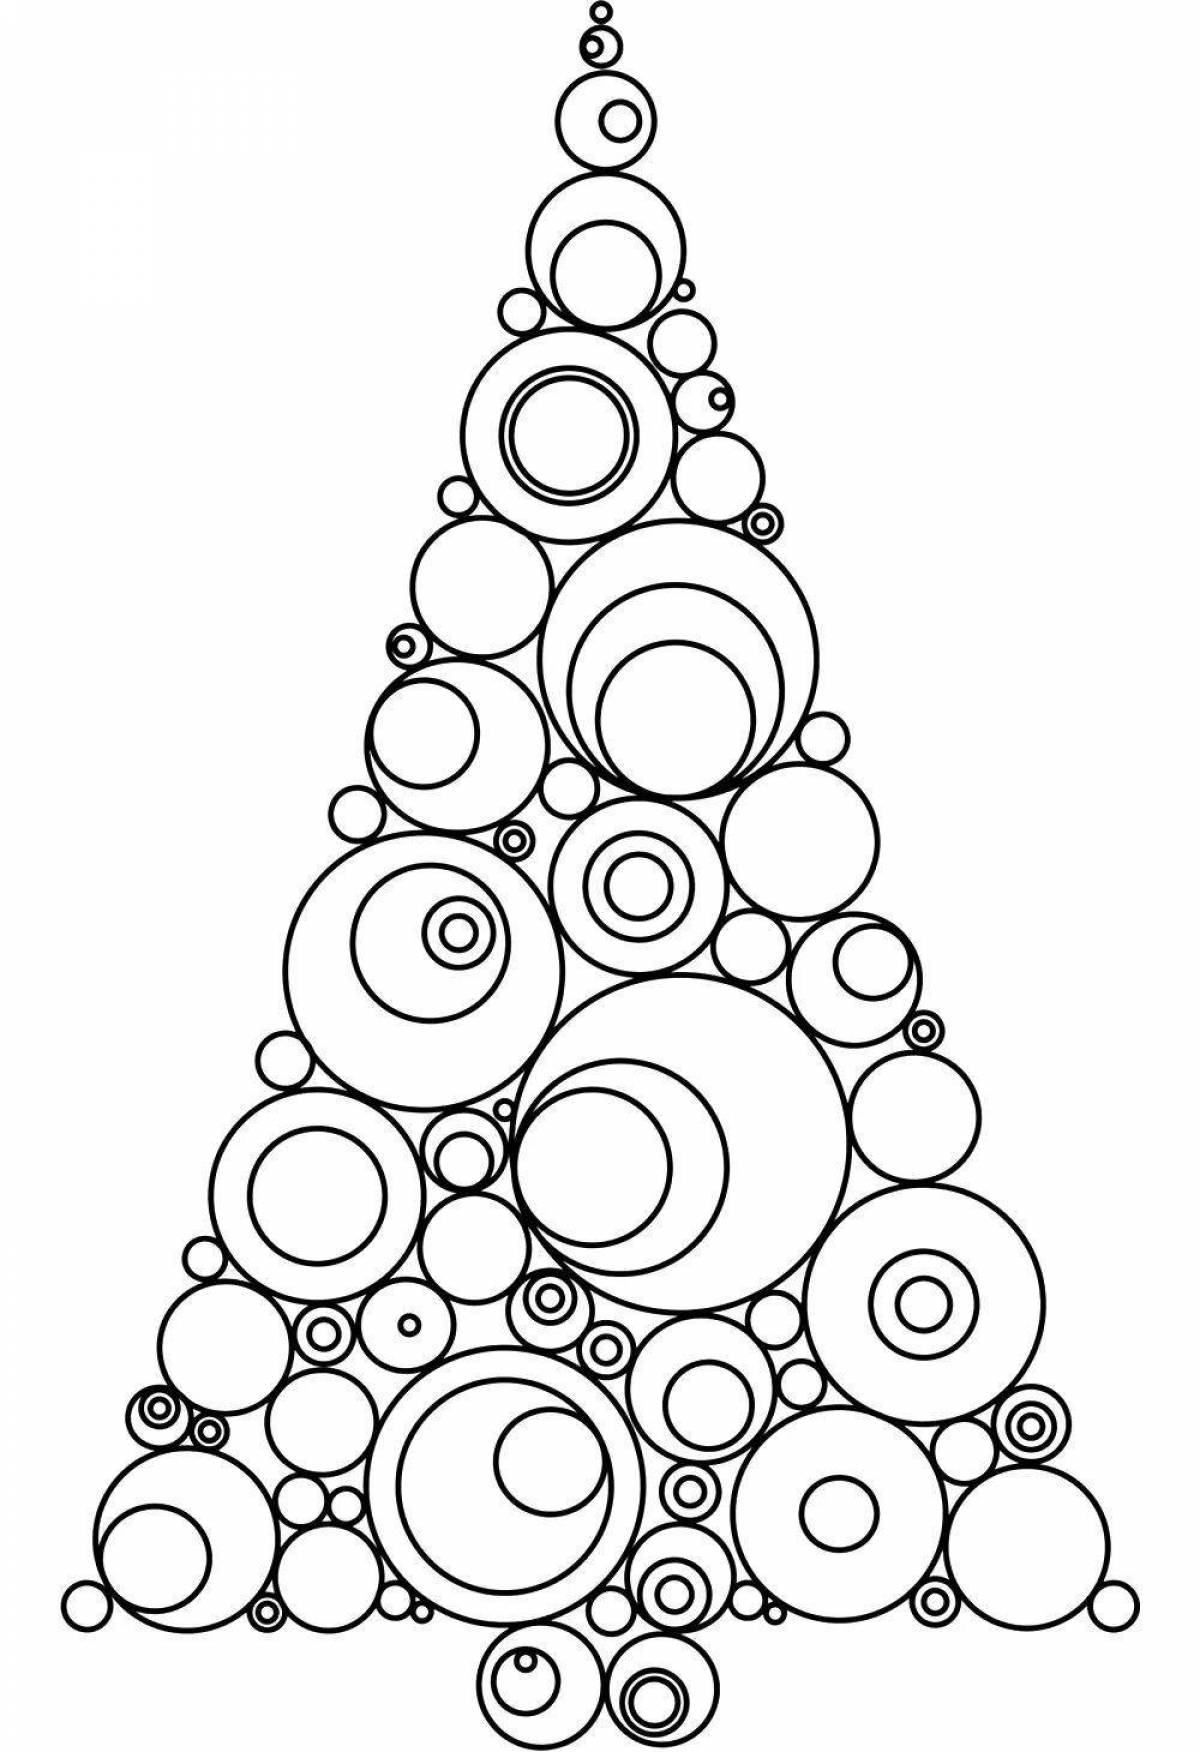 Glossy christmas tree with balls